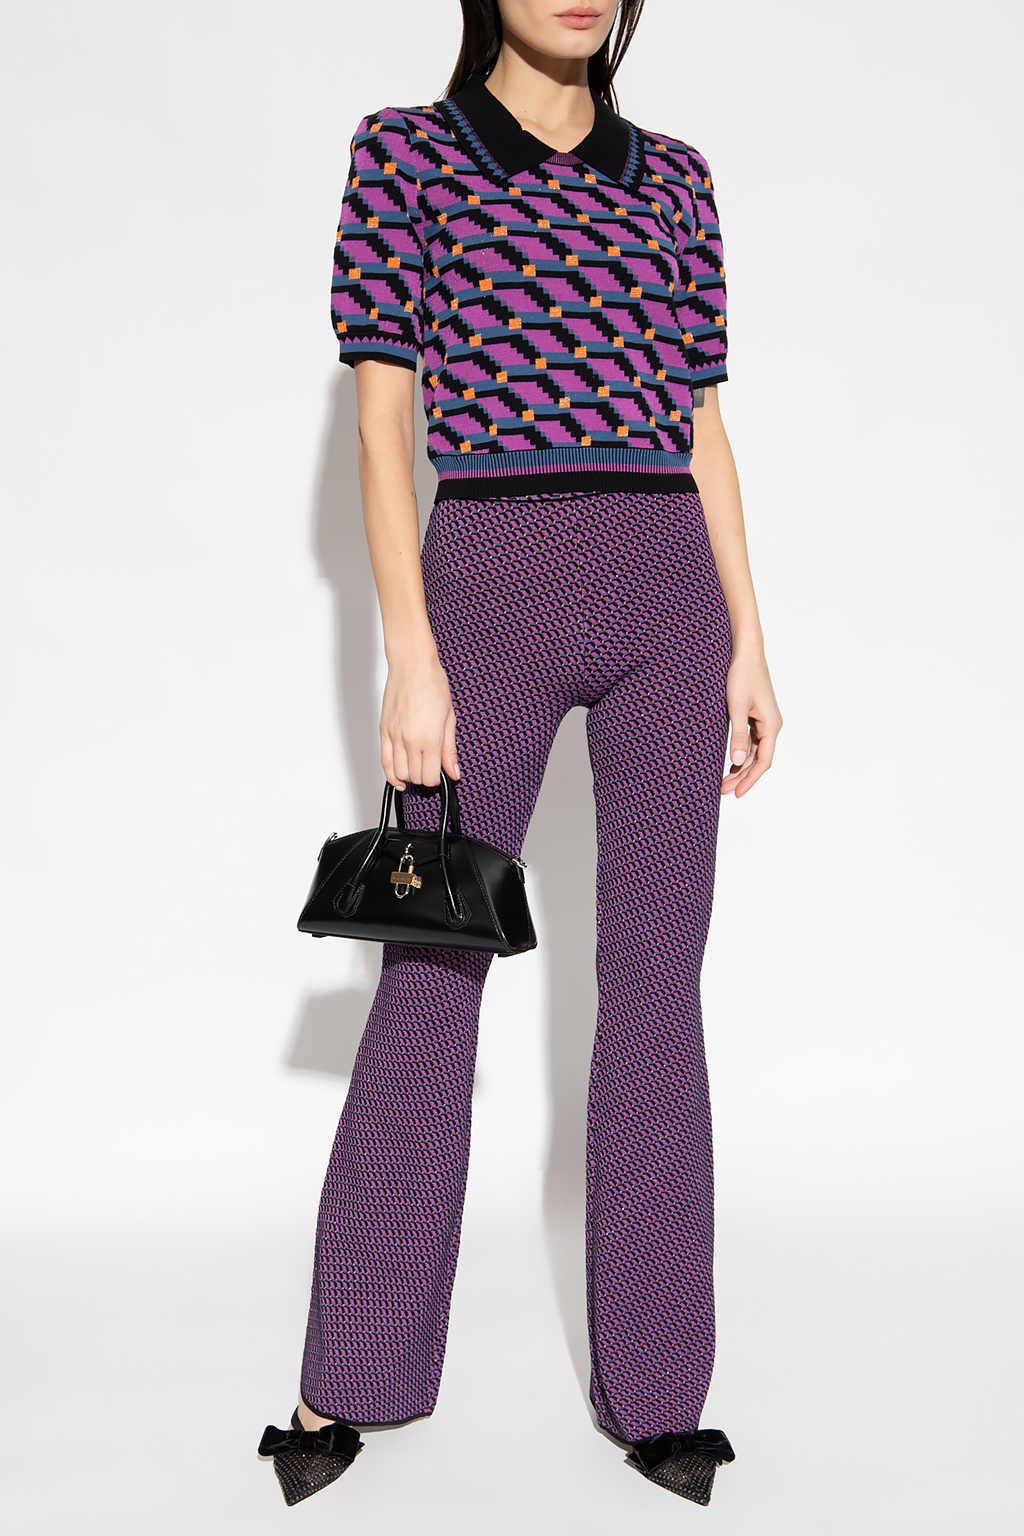 Diane Von Furstenberg ‘Ashdon’ patterned Green trousers